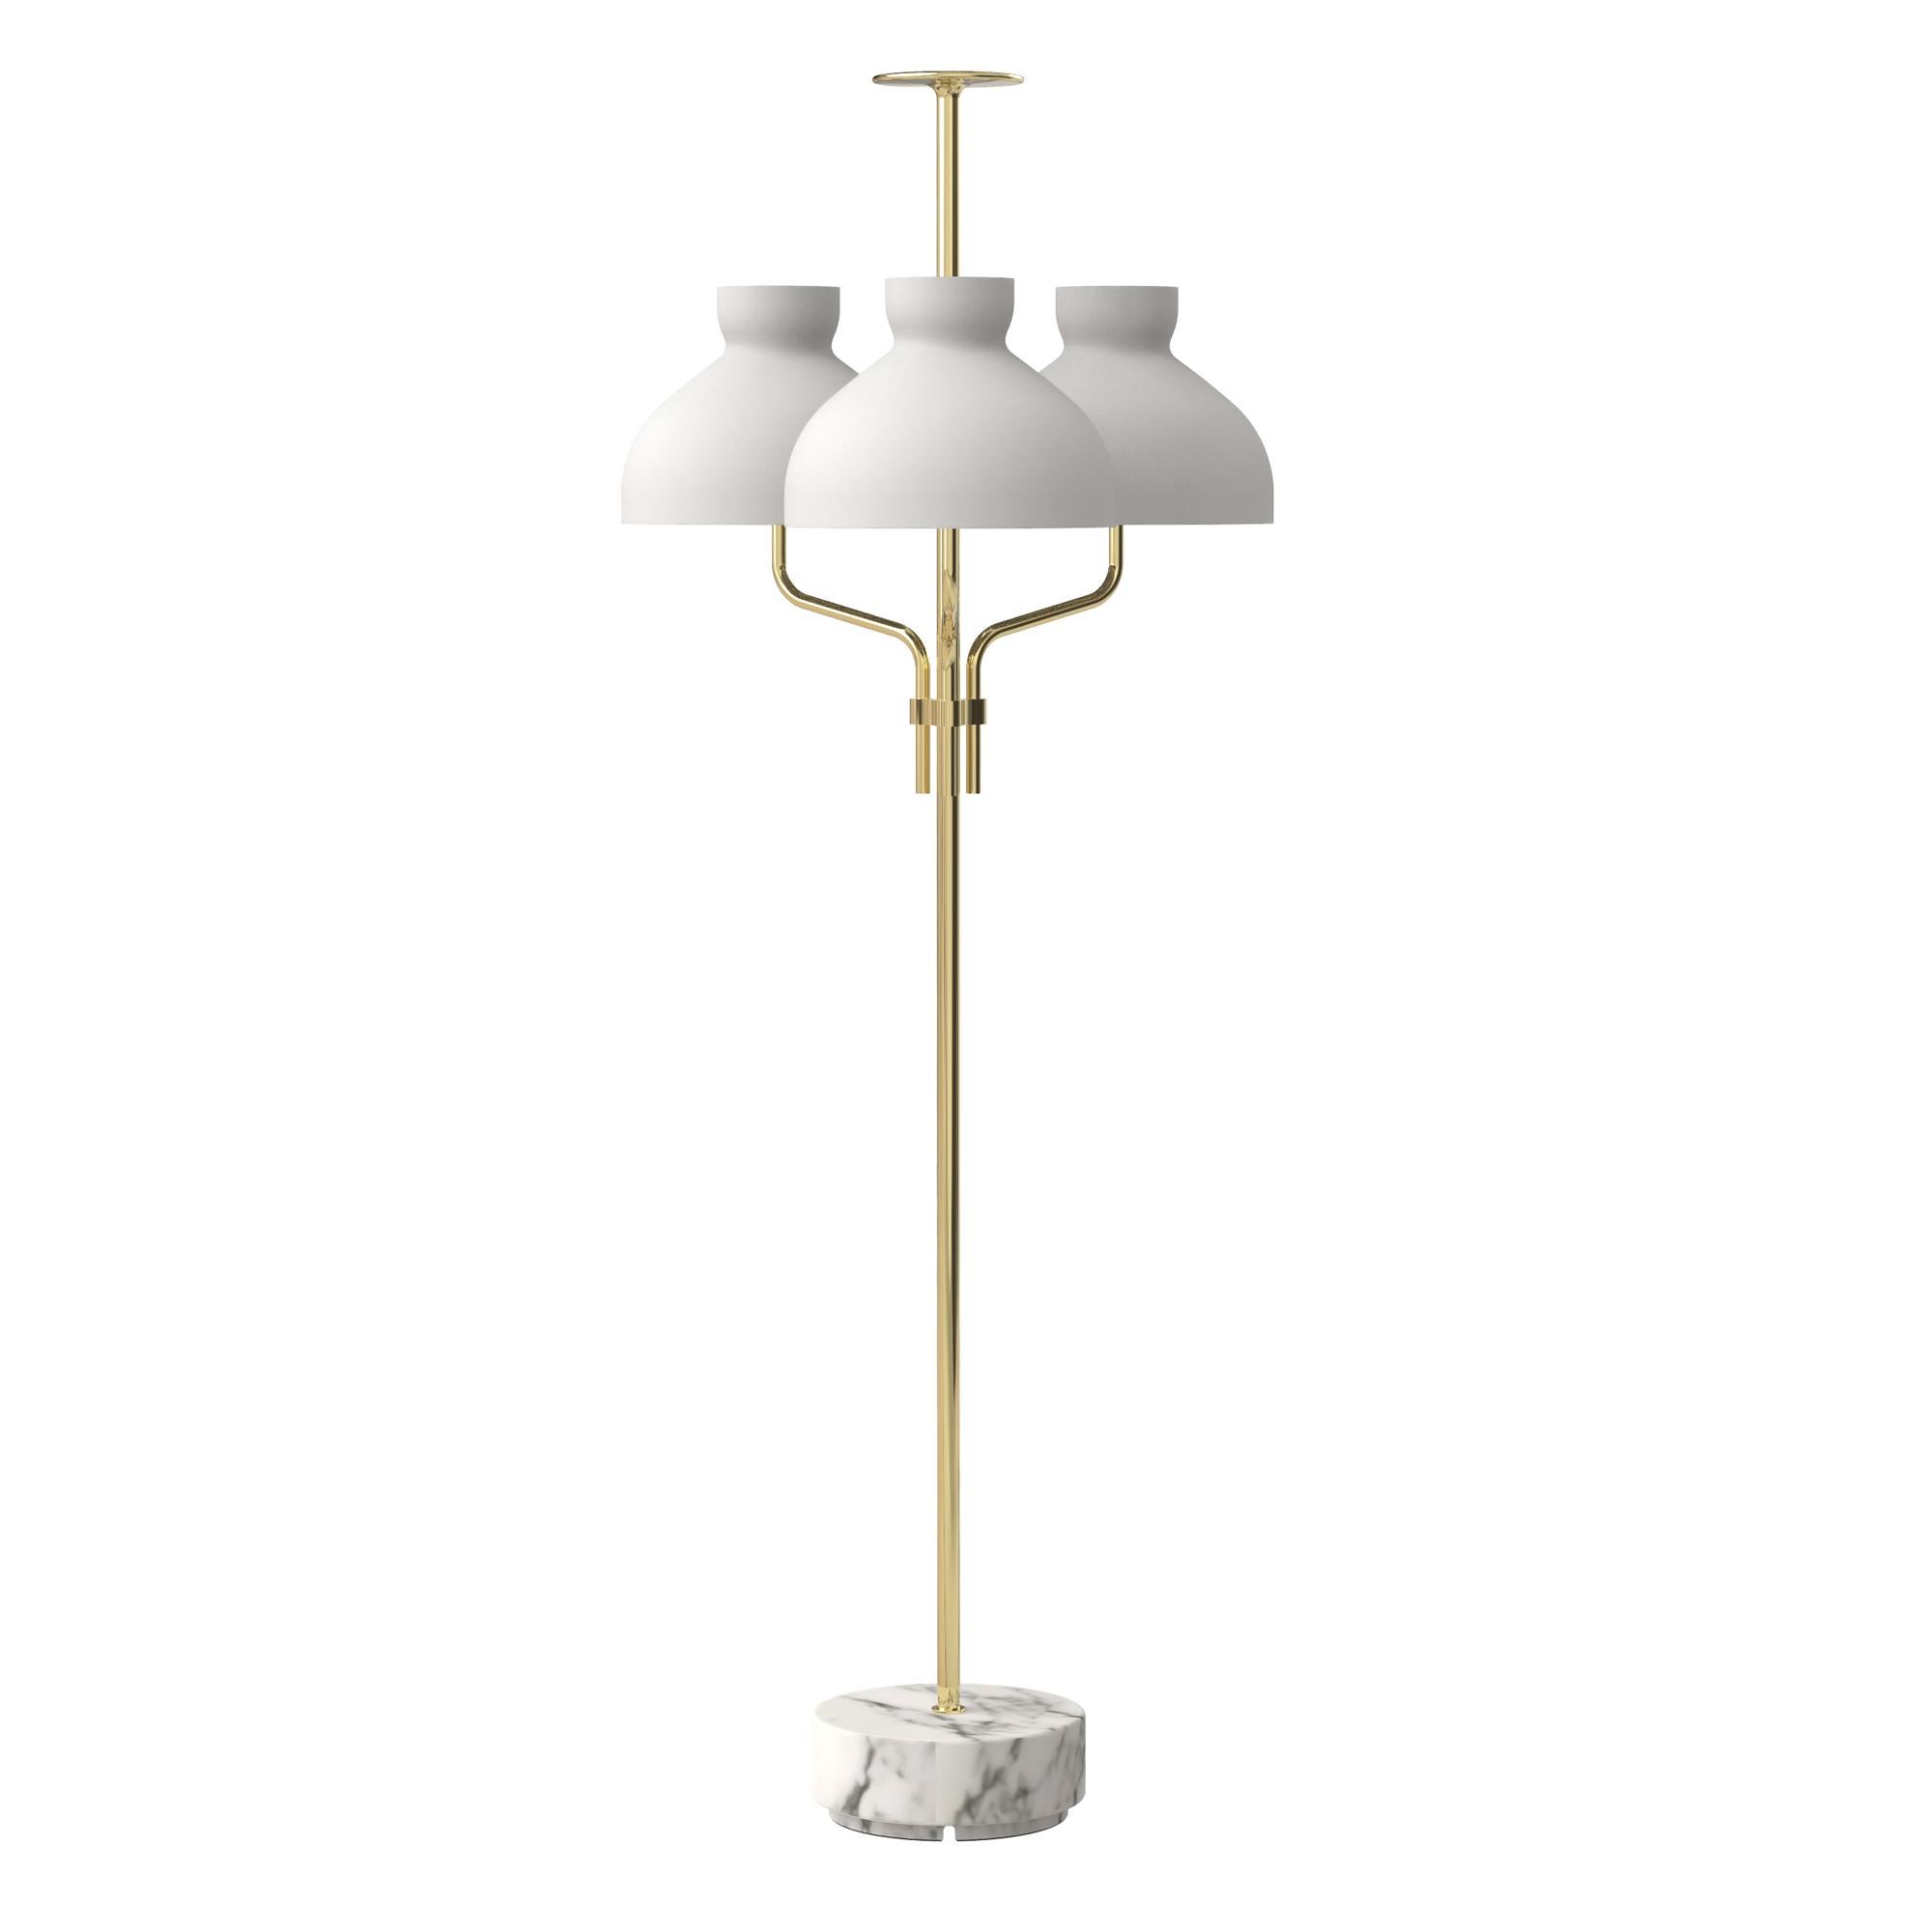 Ignazio Gardella 'Arenzano Tre Fiamme' Floor Lamp in White Marble and Brass In New Condition For Sale In Glendale, CA